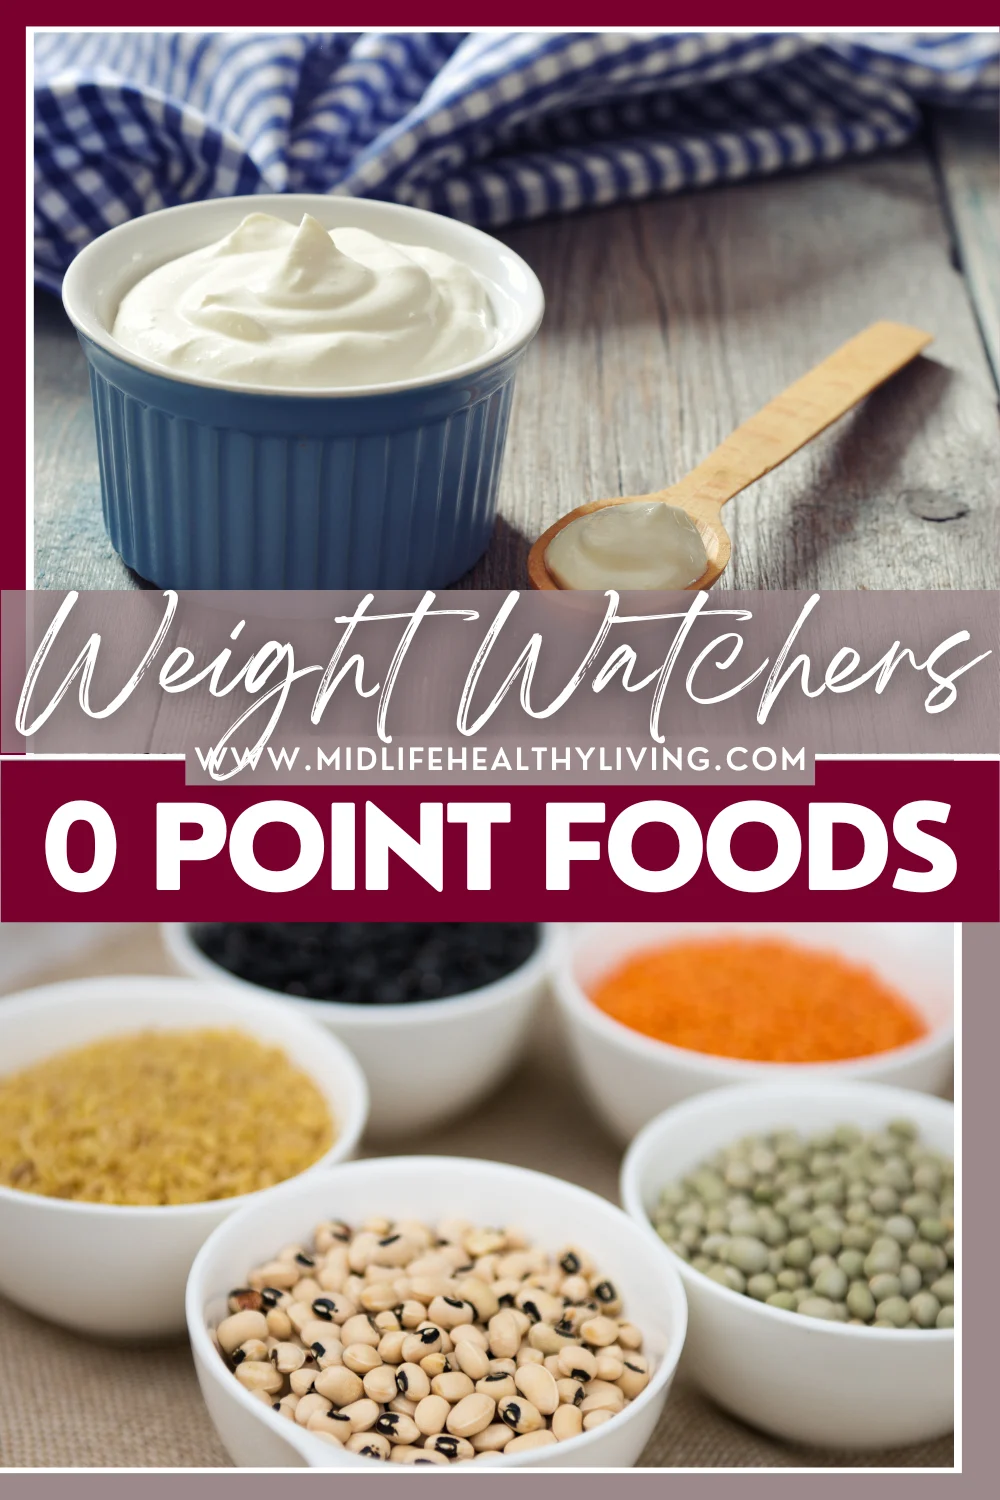 Weight Watchers 1 Point Snack Ideas + Portion Size Tricks!